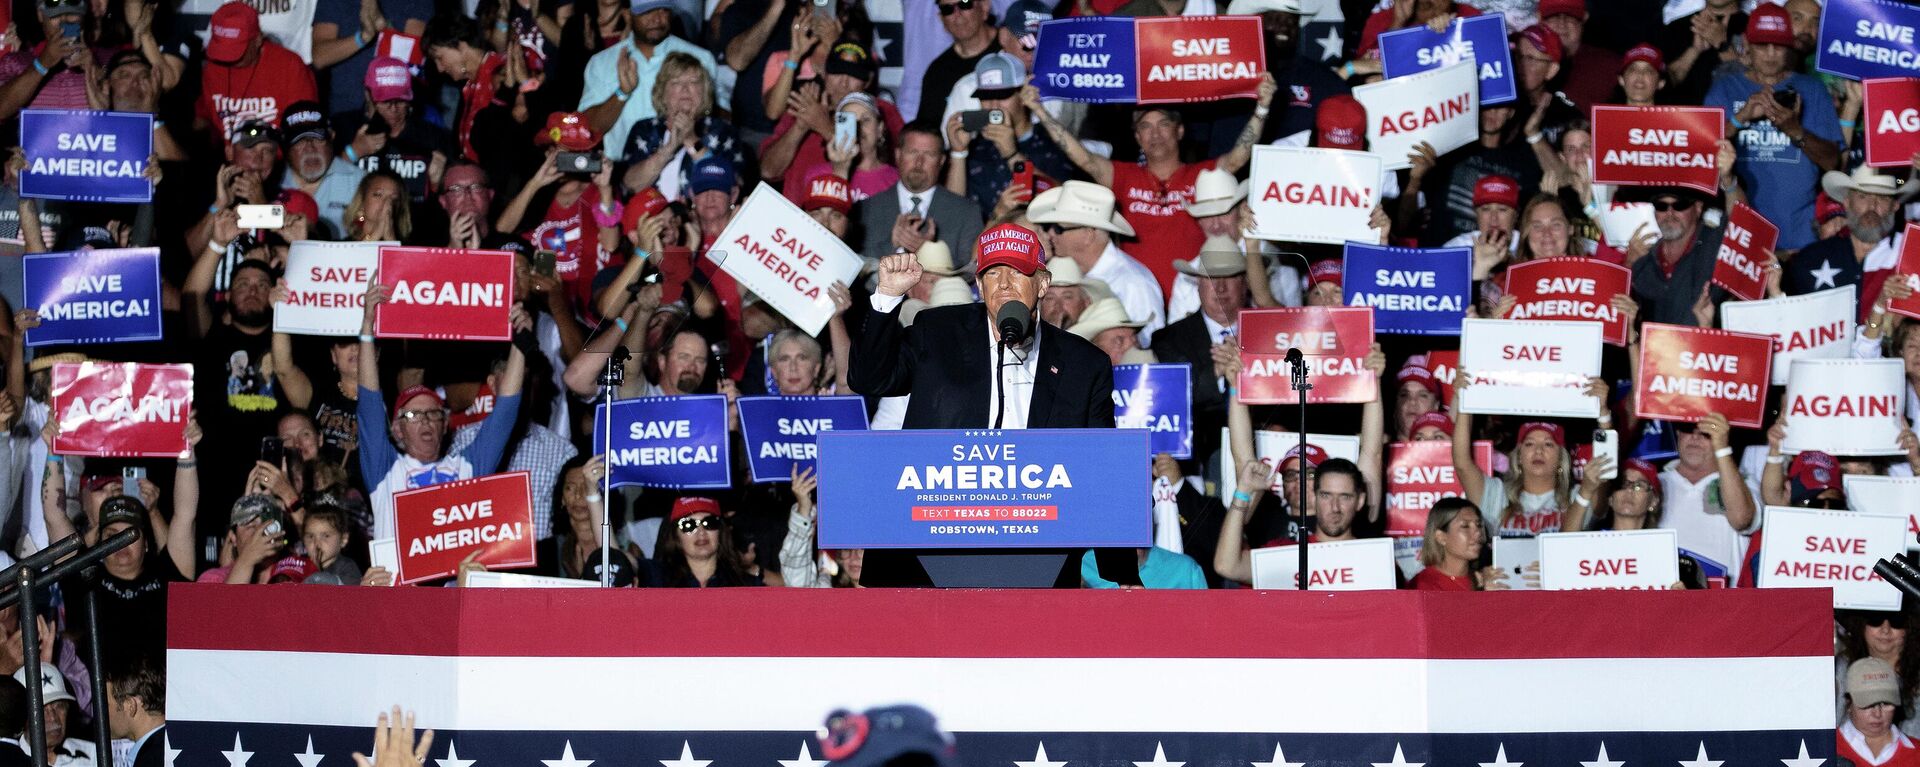 Former President Donald Trump speaks at a rally, Saturday, Oct. 22, 2022, in Robstown, Texas. - Sputnik International, 1920, 23.10.2022